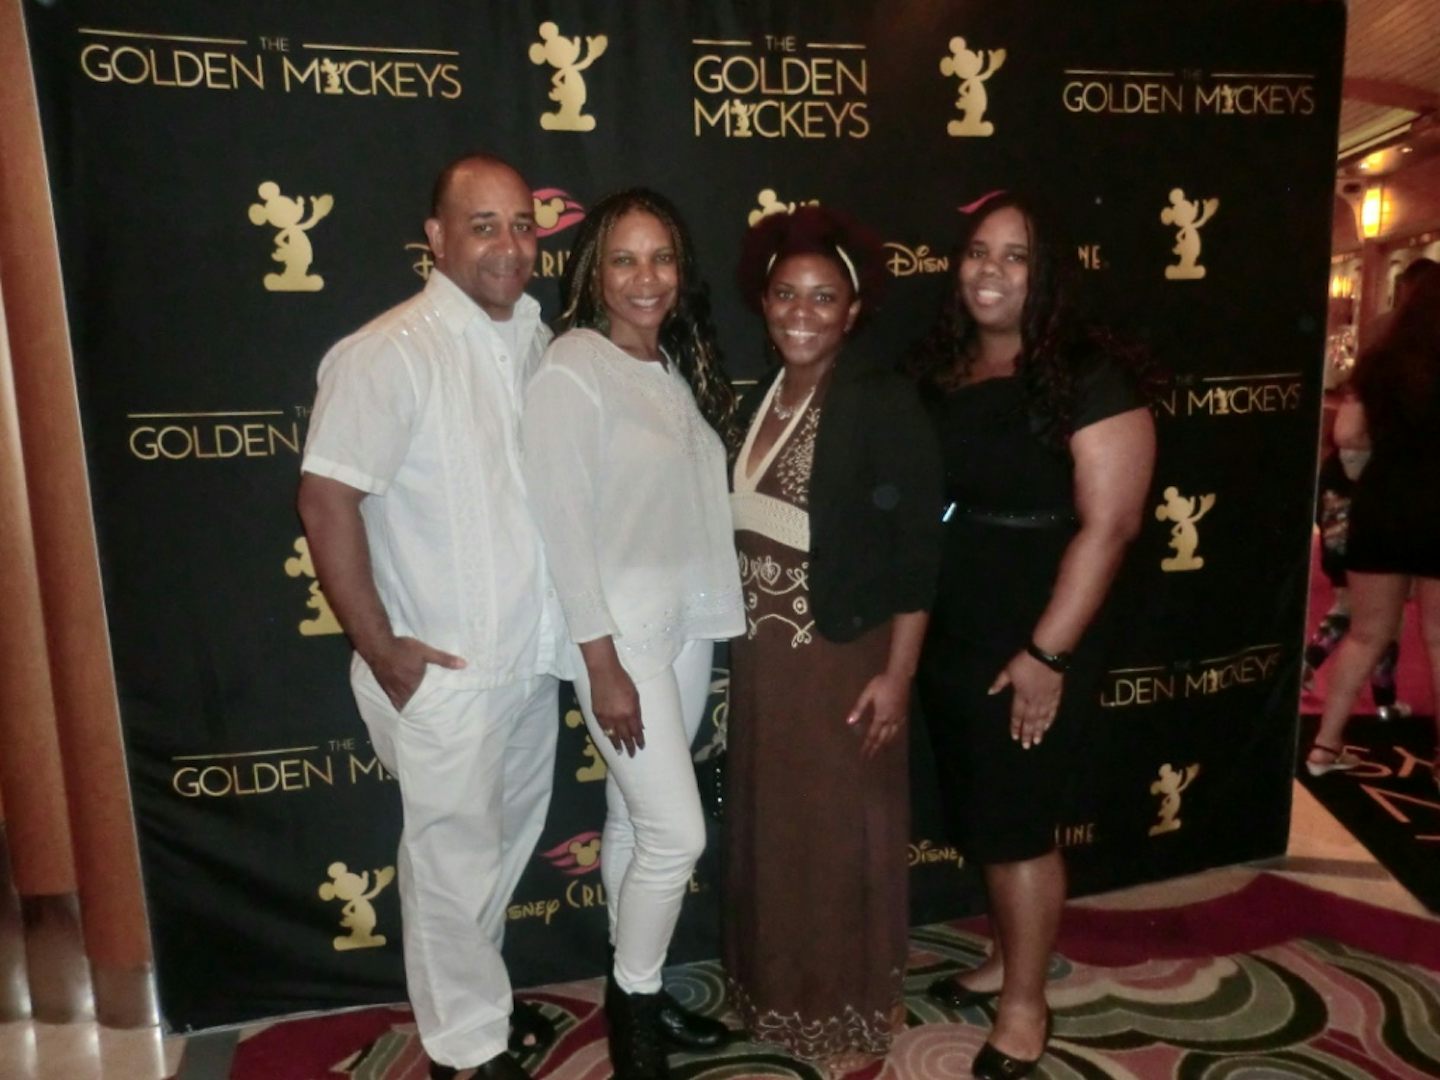 The Golden Mickey's were tonight!!